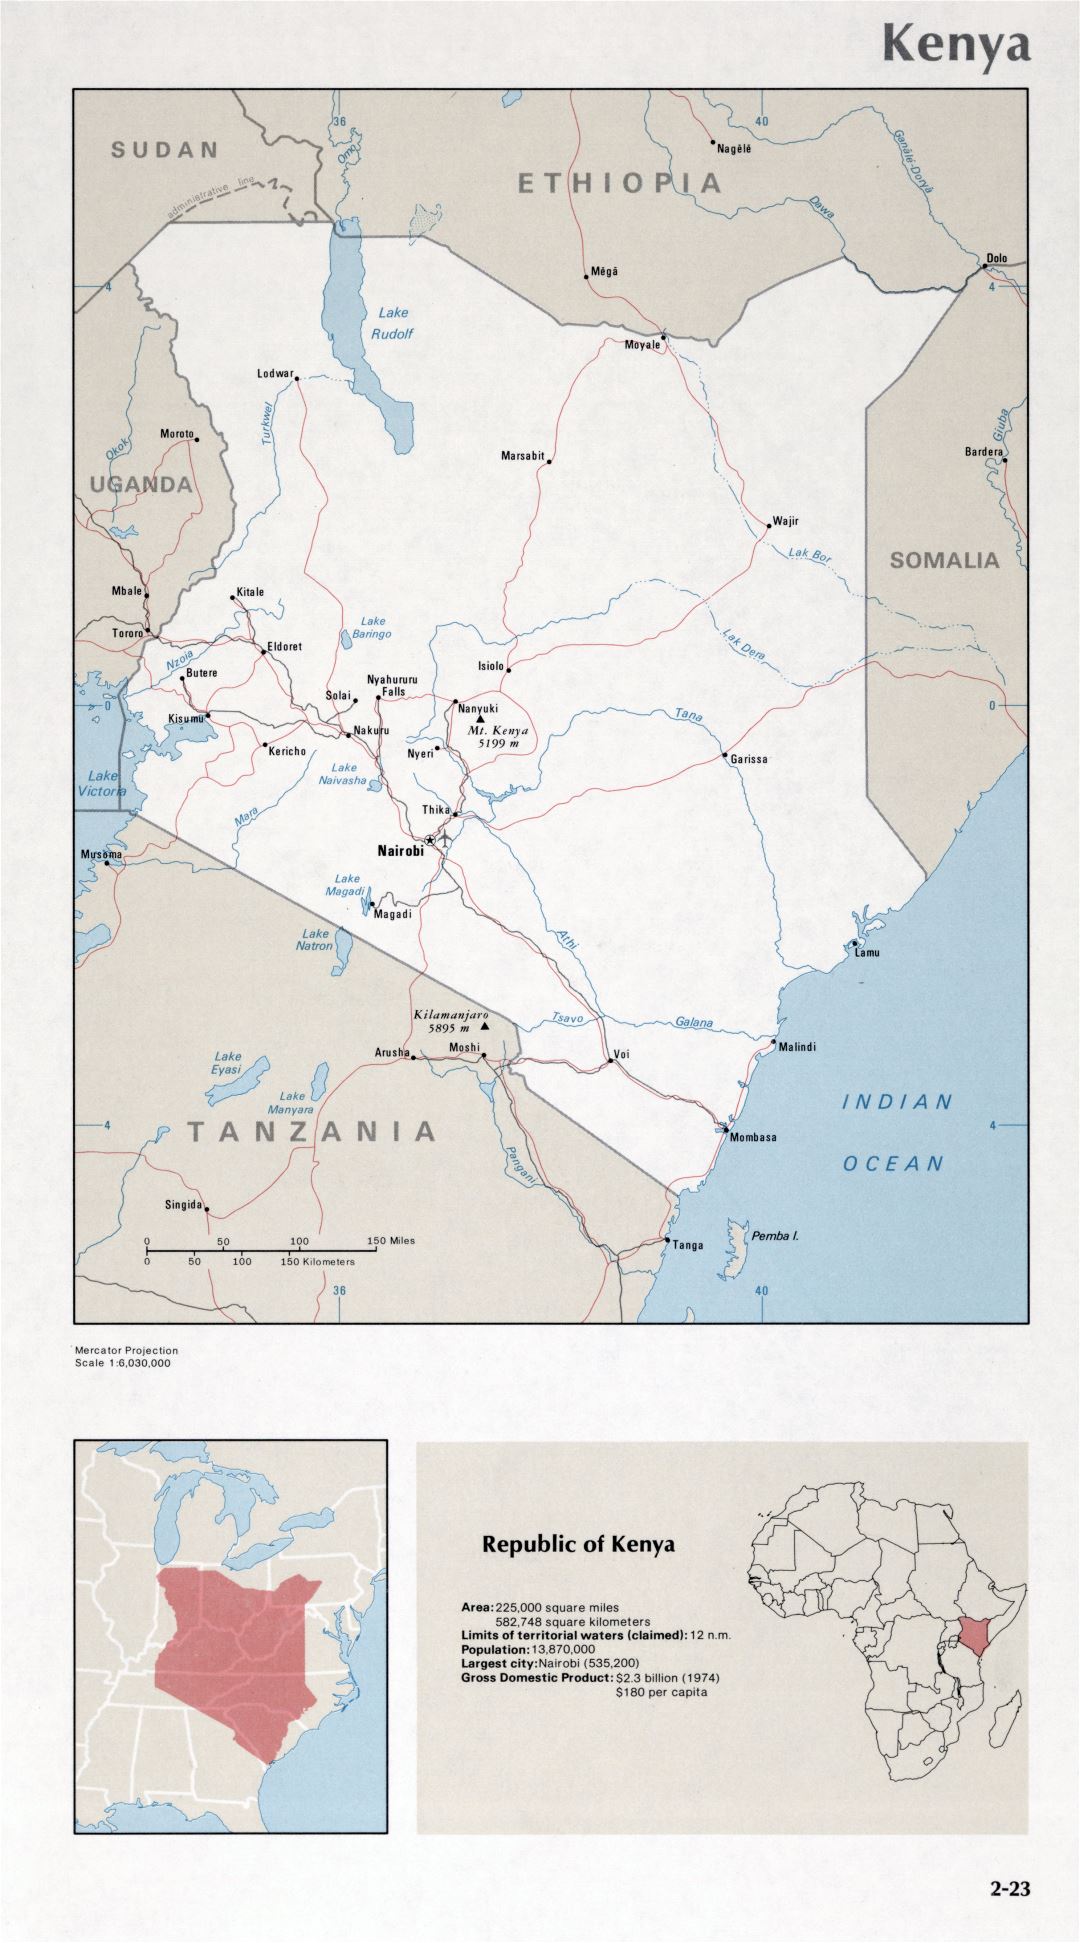 Map of Kenya (2-23)